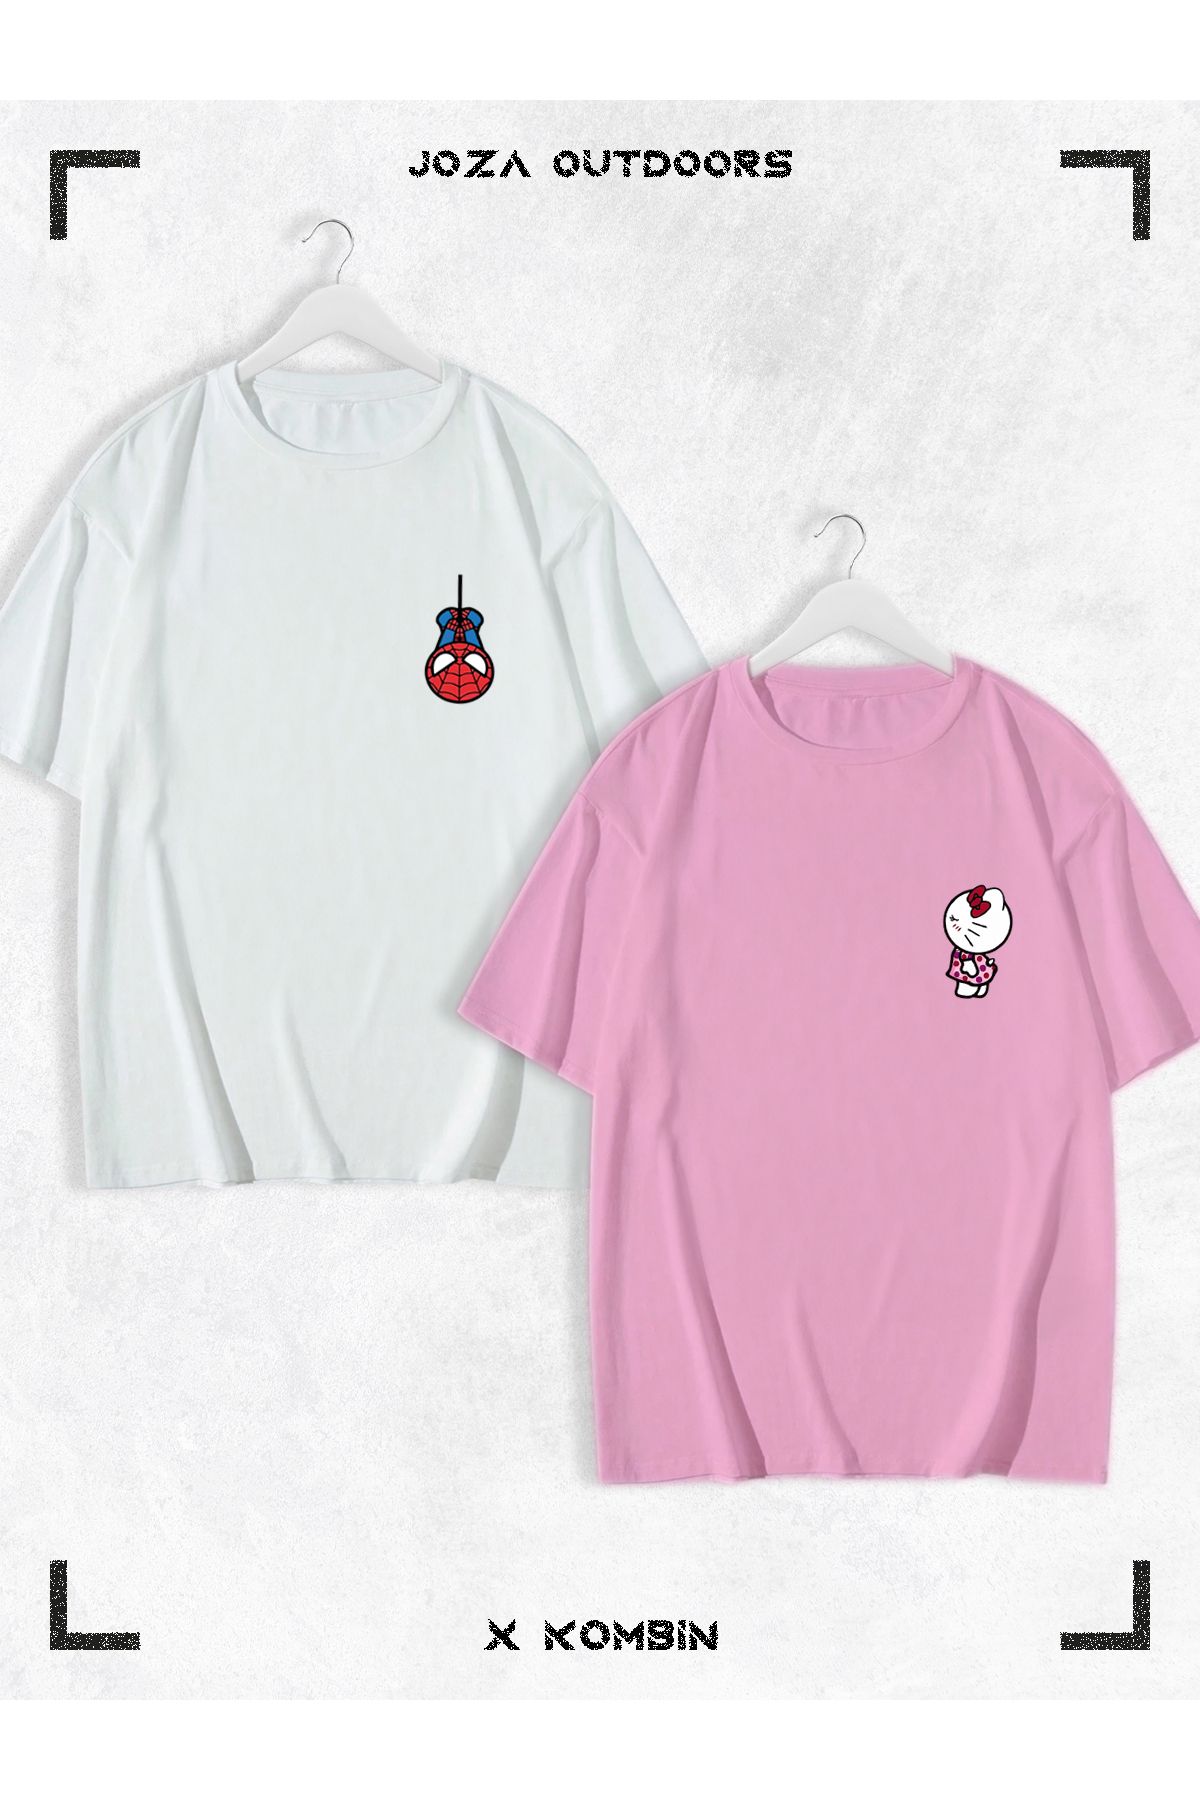 Joza Outdoors Kadın Erkek Unisex Hello Kitty Spiderman Sevgili Çift Kombini Oversize Renkli Tshirt 2'li Takım